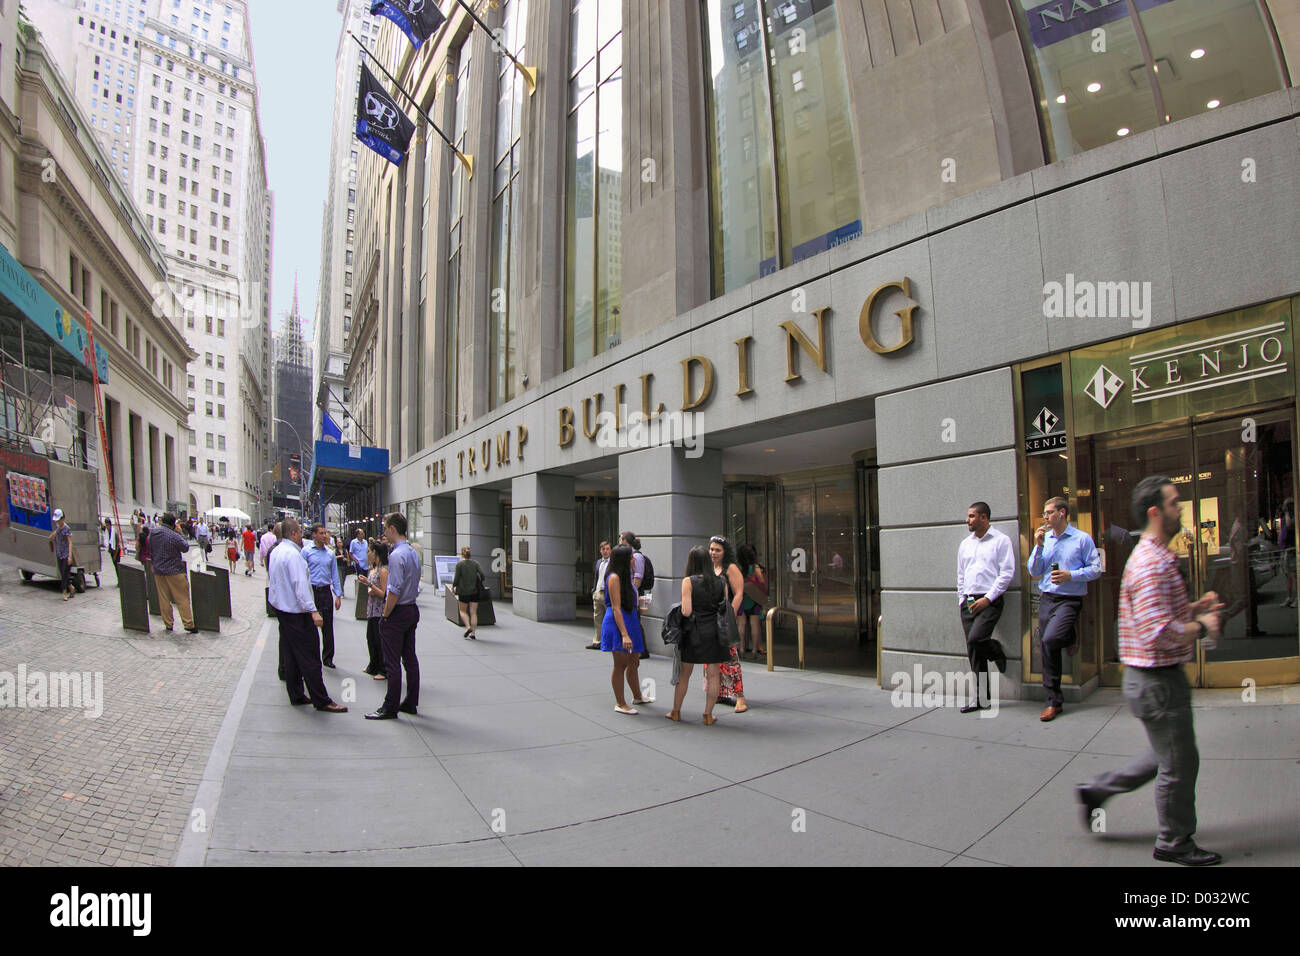 The Trump Building Wall Street lower Manhattan New York City Stock Photo